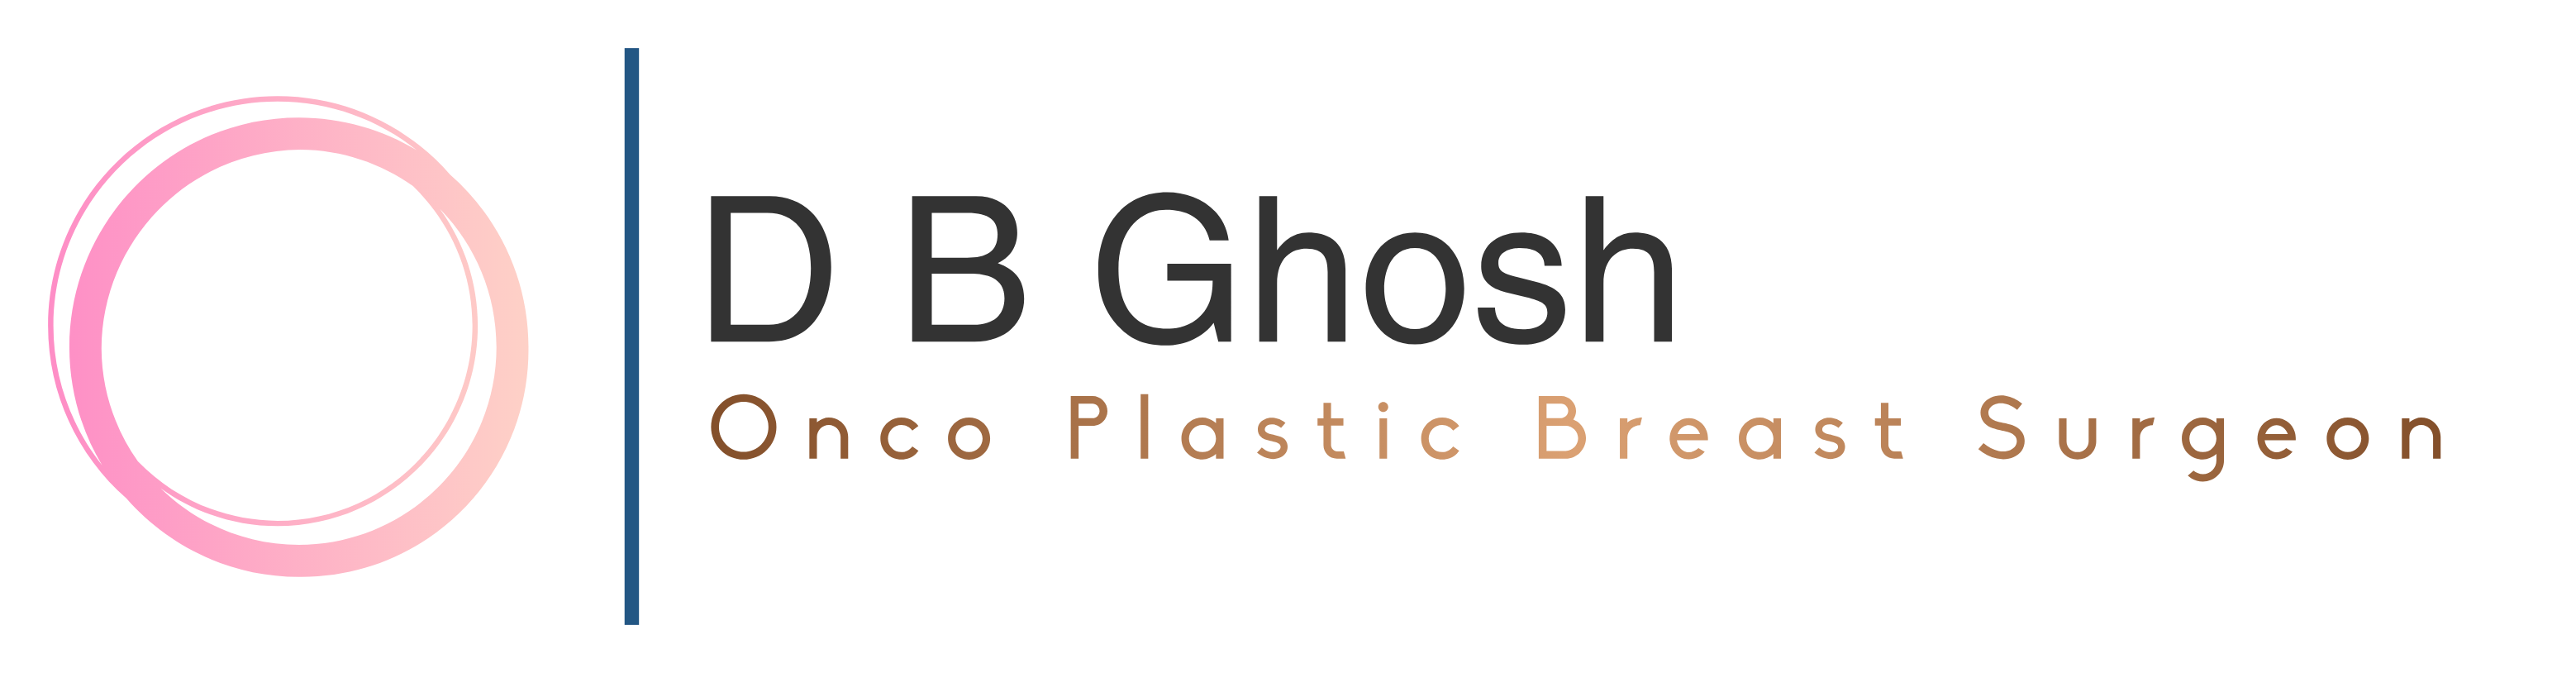 D.B Ghosh logo